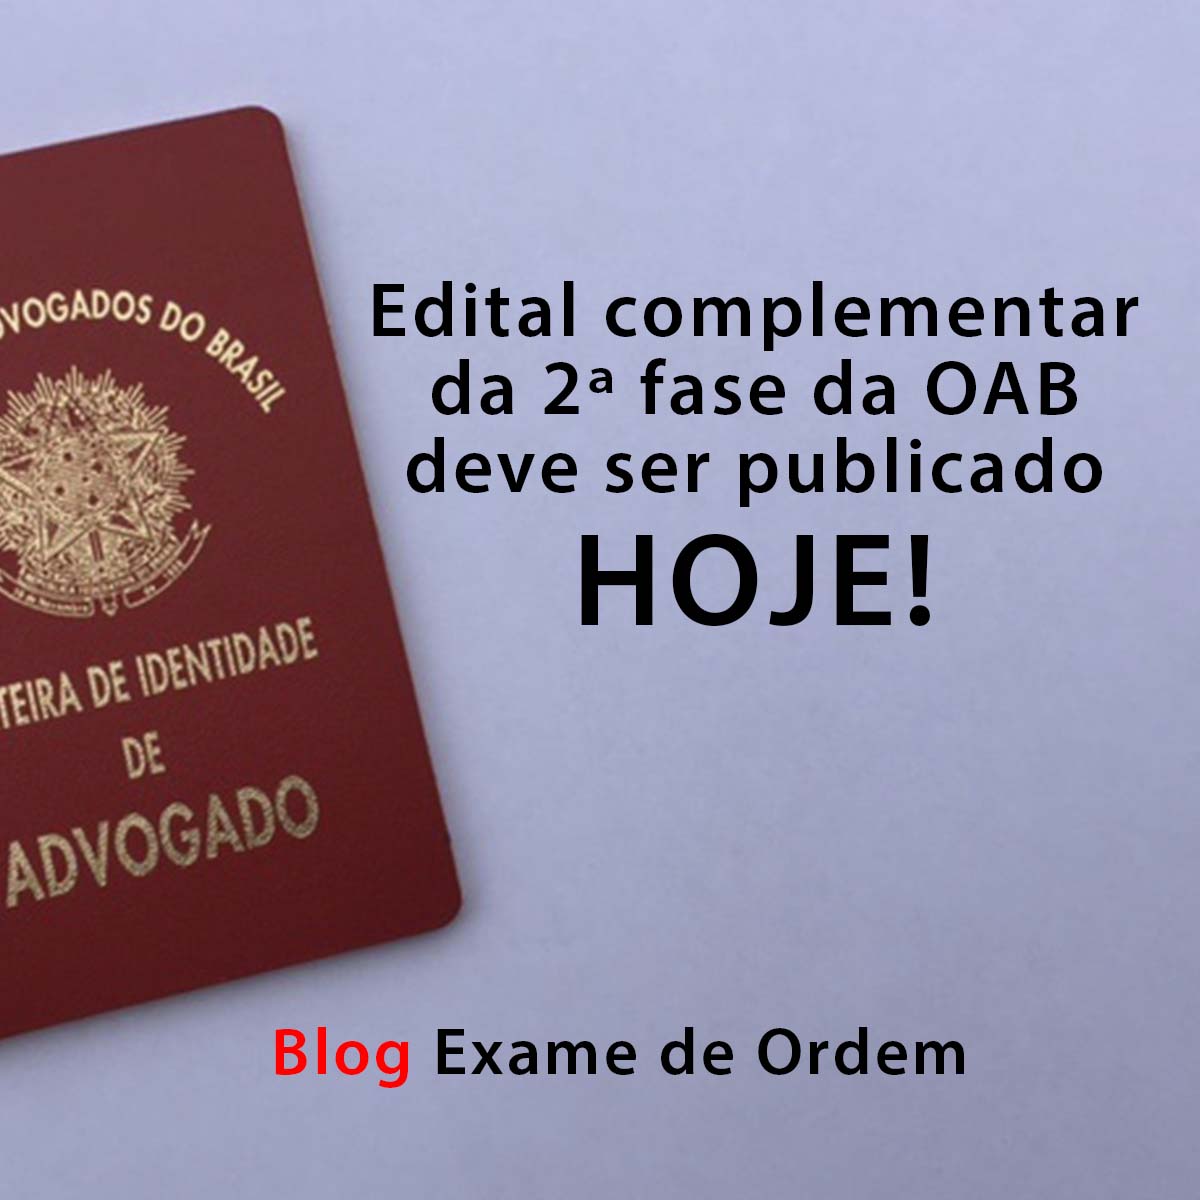 Edital complementar da 2 fase da OAB deve ser publicado hoje!